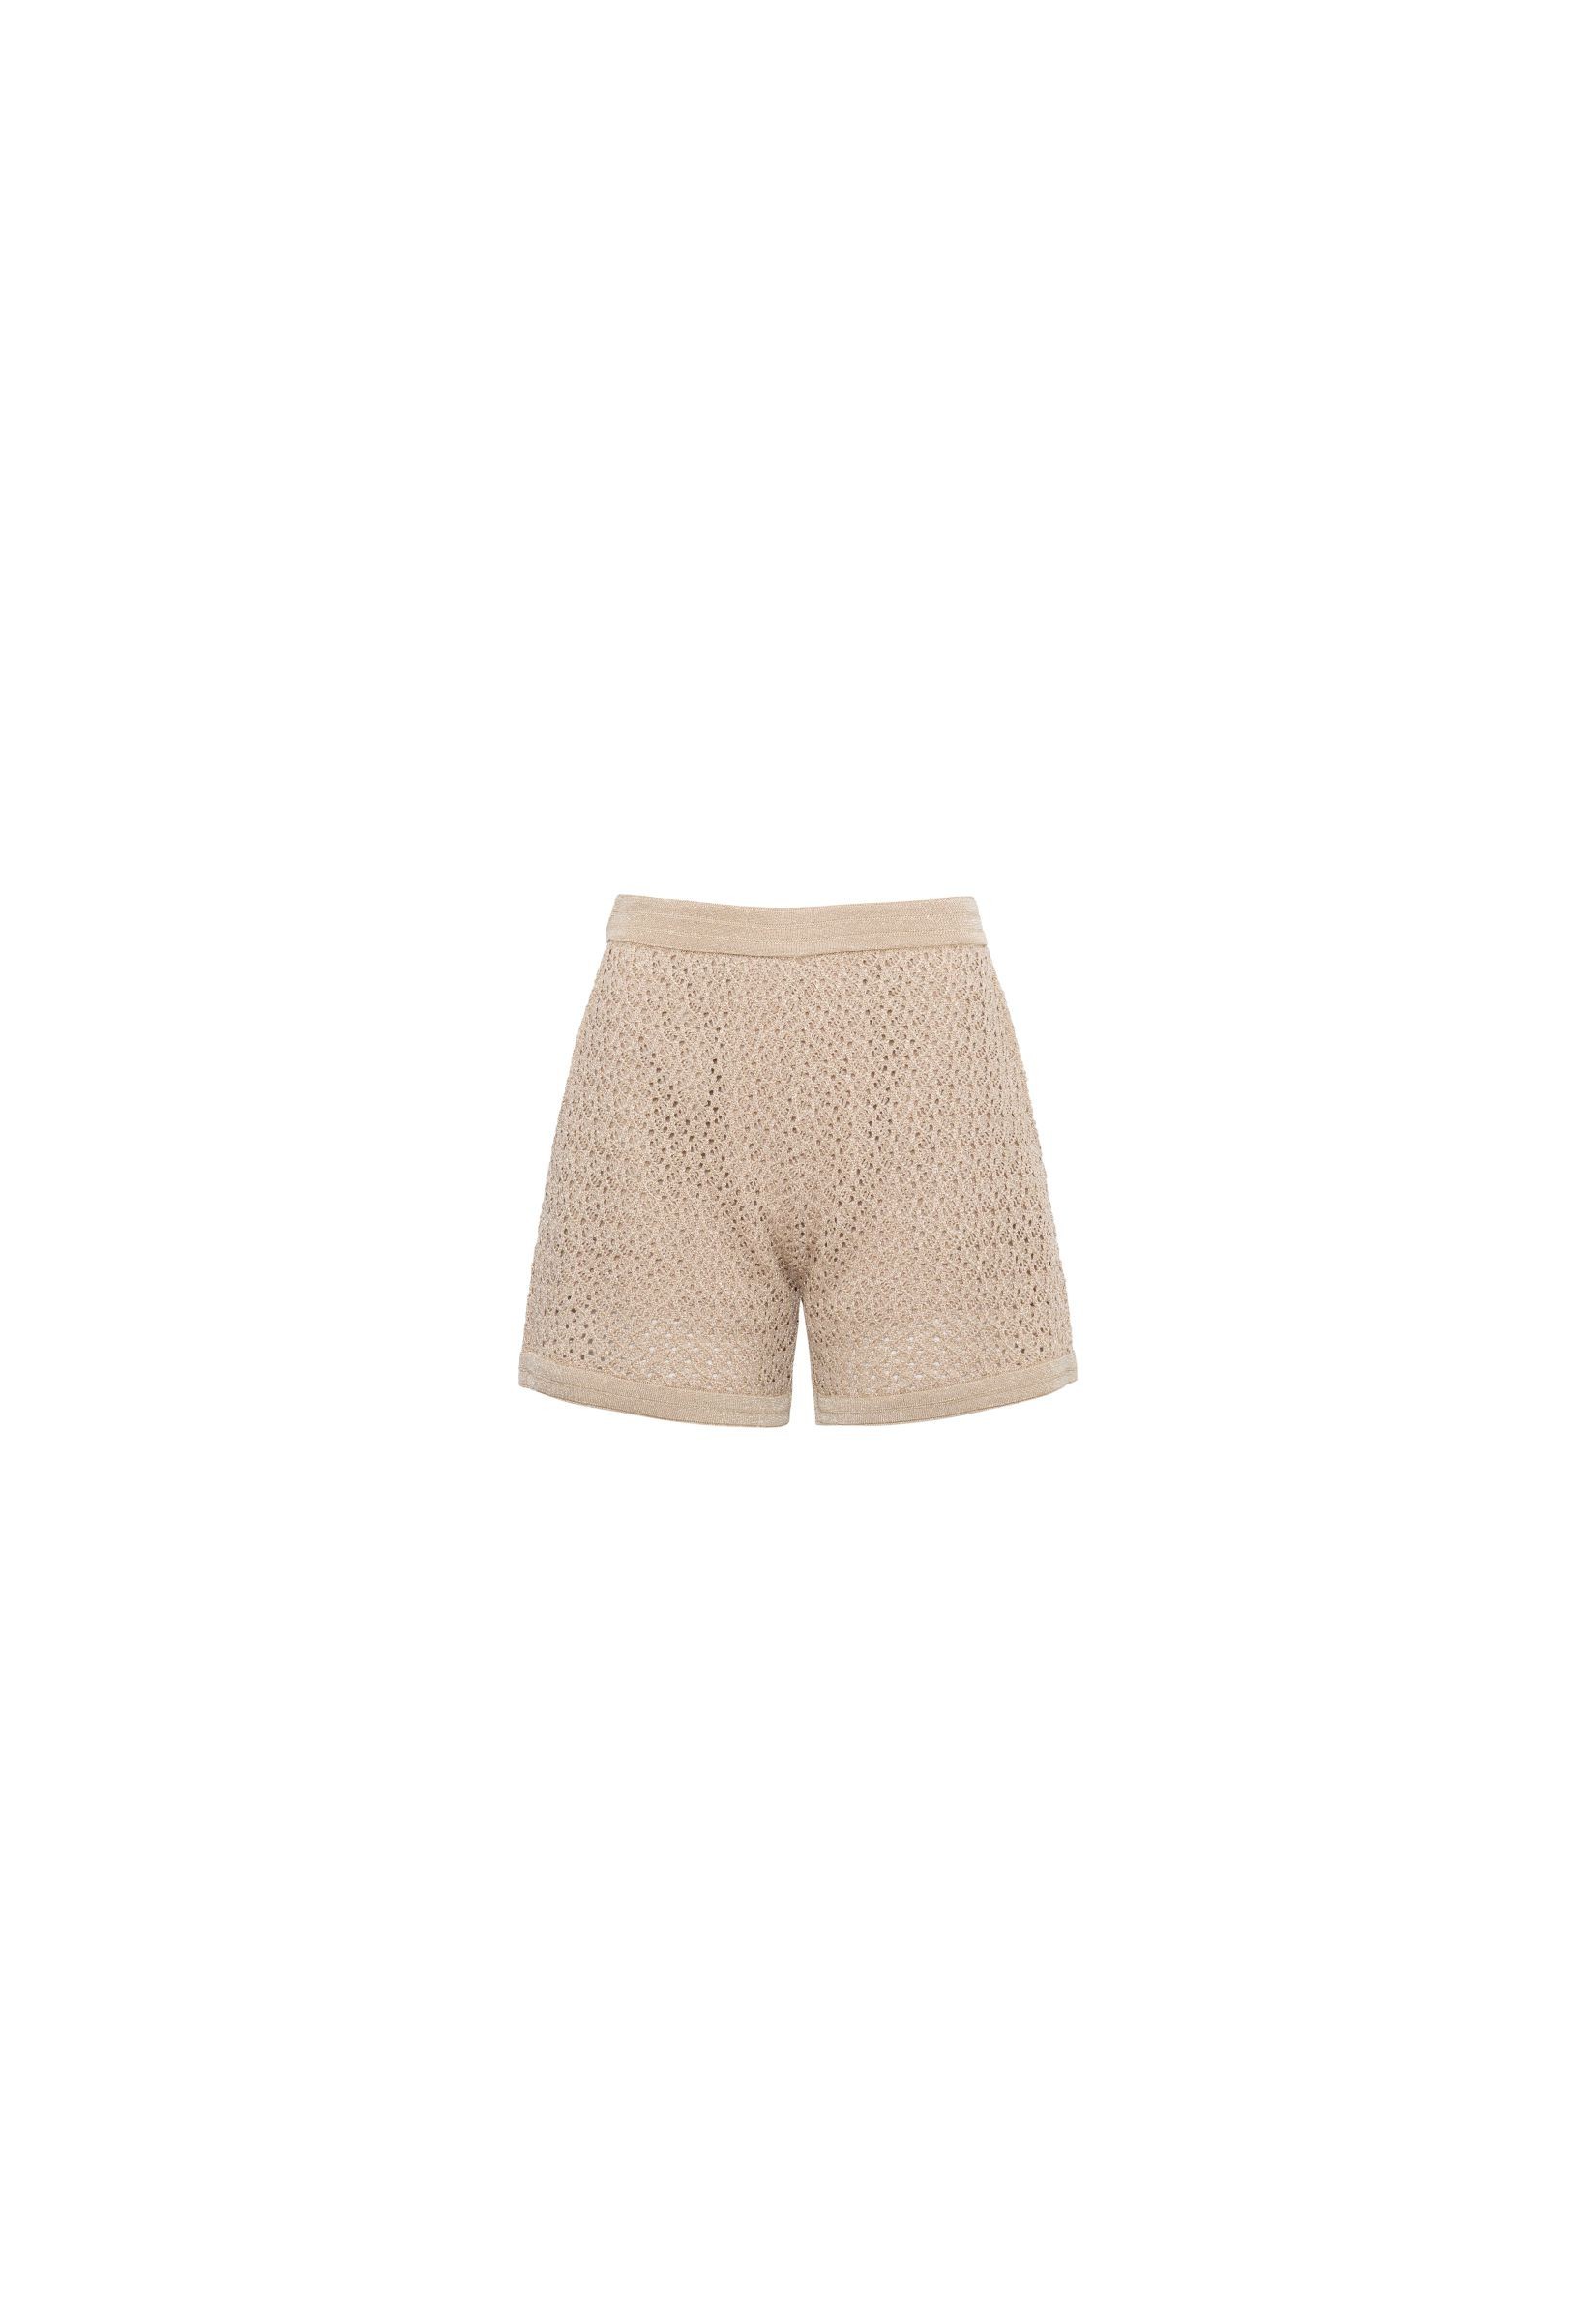 Shorts tricot c/ lurex